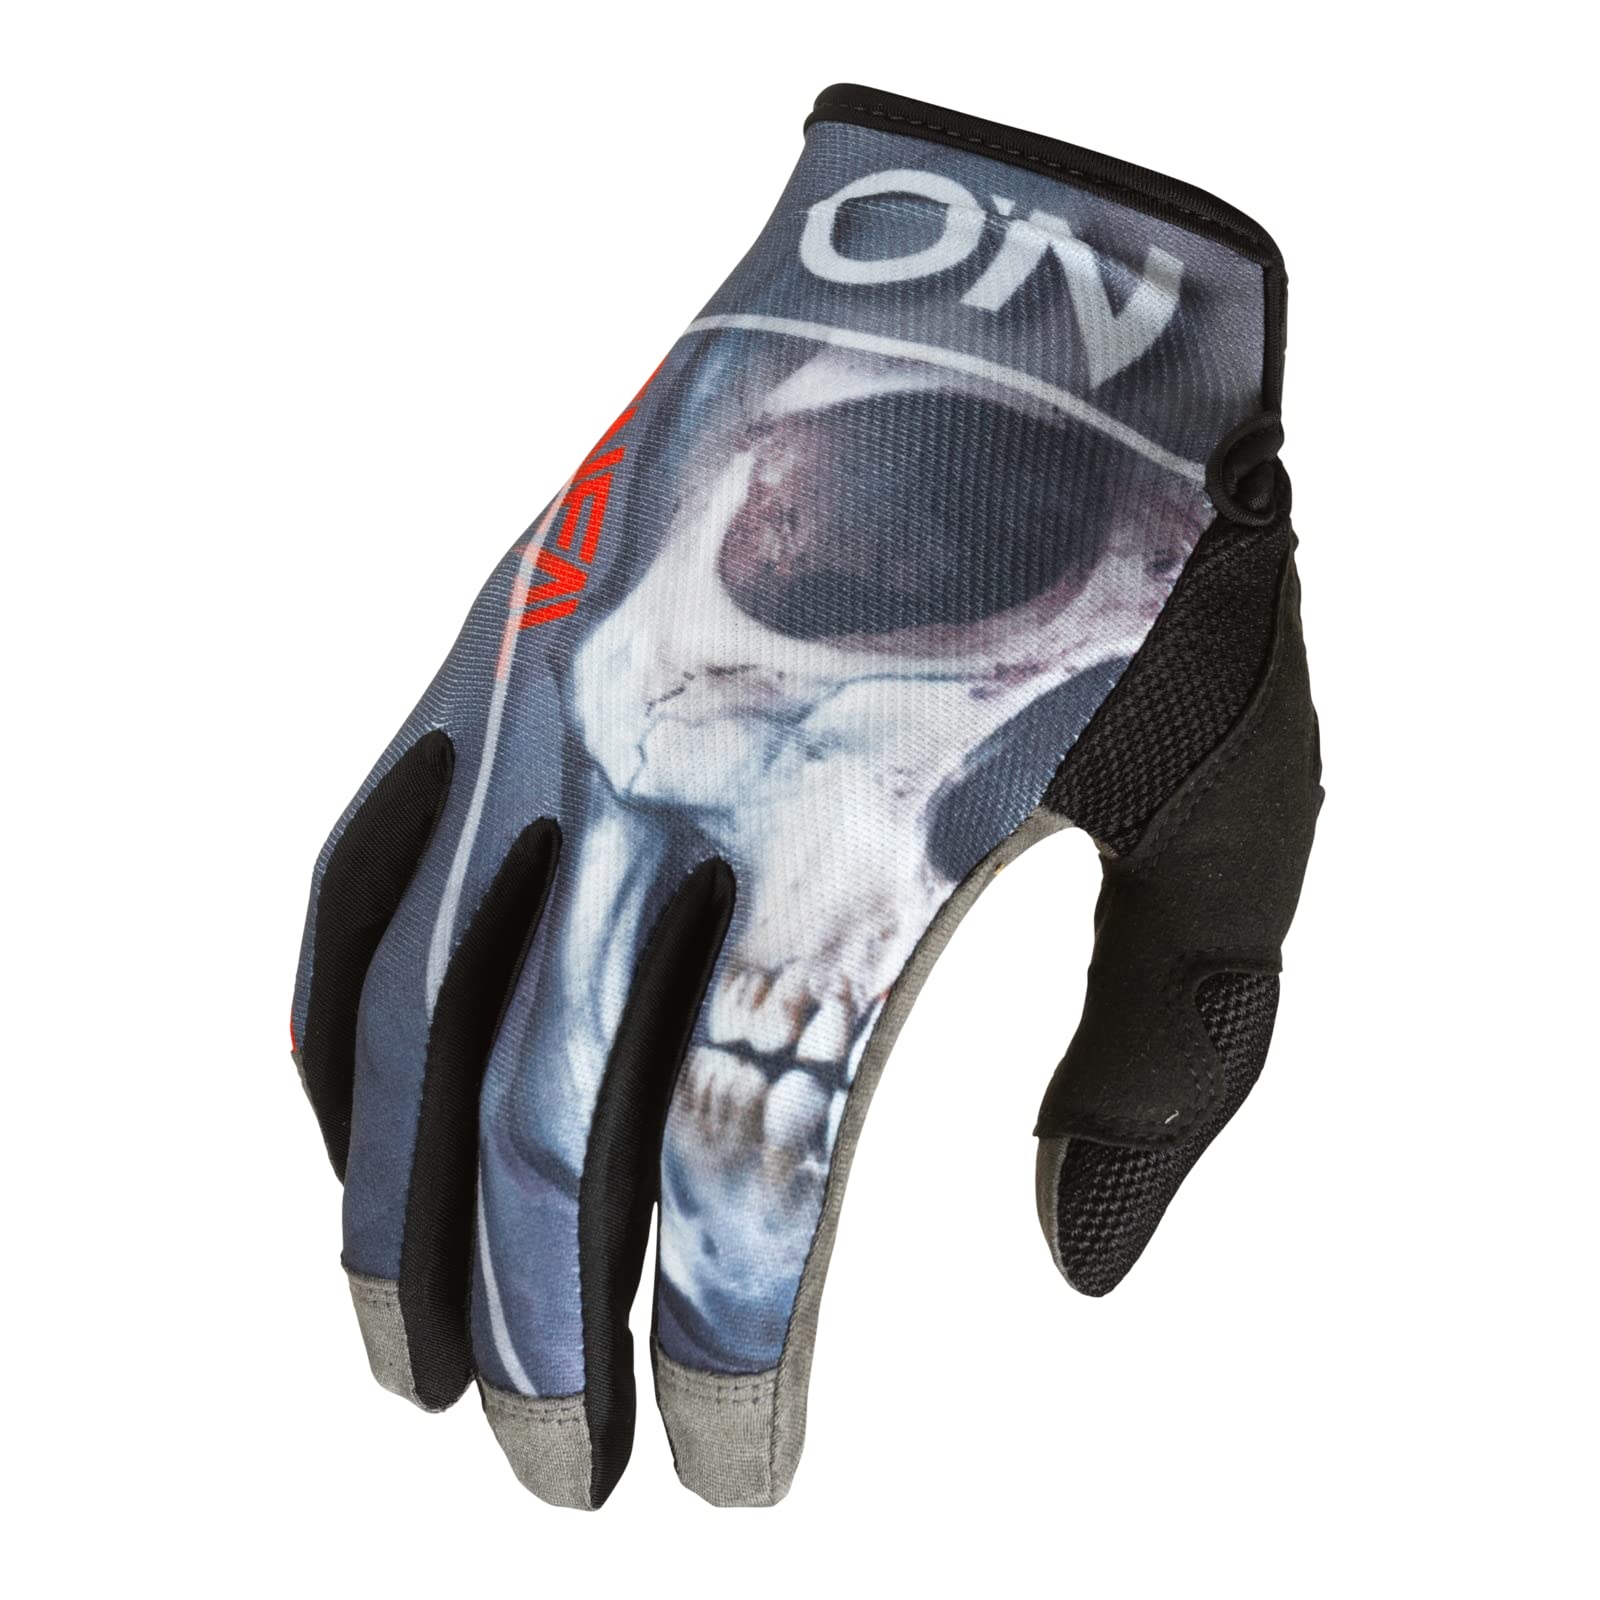 O'NEAL | Fahrrad- & Motocross-Handschuhe | MX MTB DH FR Downhill Freeride | Langlebige, Flexible Materialien, belüftete Nanofront-Handpartie | Mayhem Glove Bones V.22 | Erwachsene | Schwarz Rot | S von O'NEAL